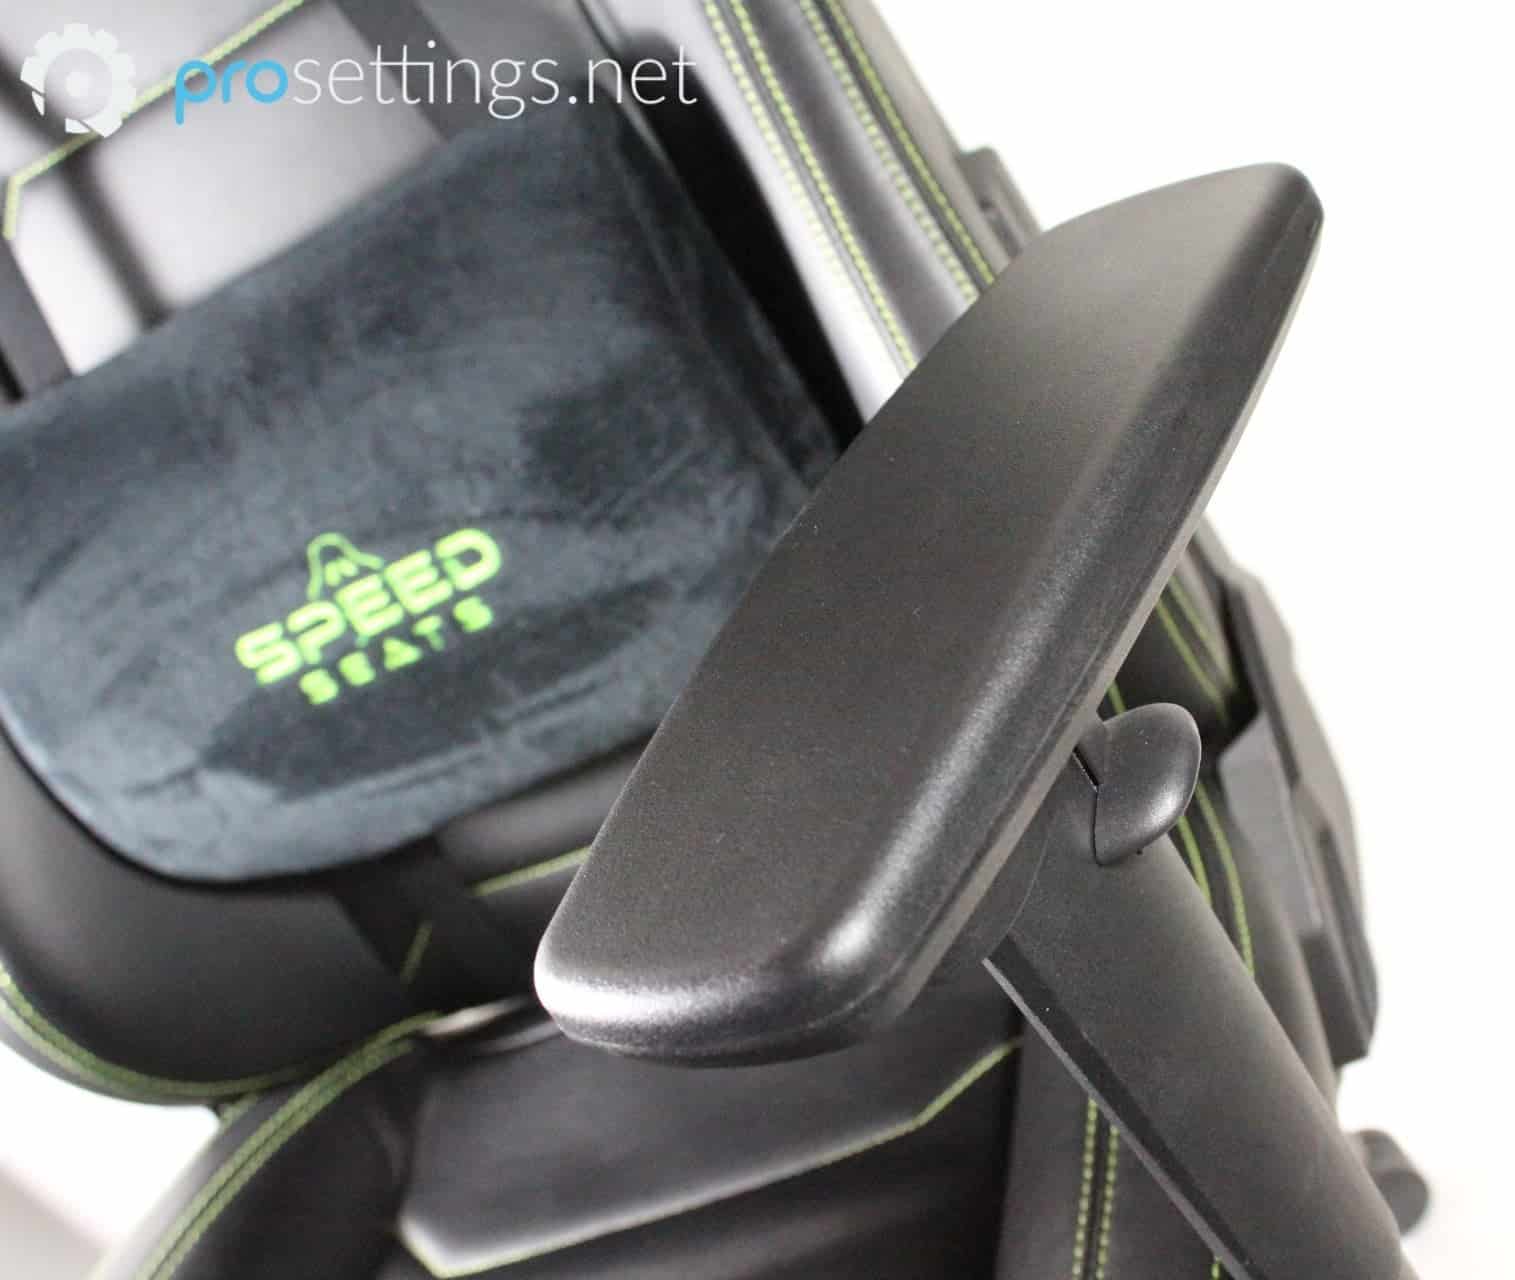 Speedseats Comfort Review Chair Armrests